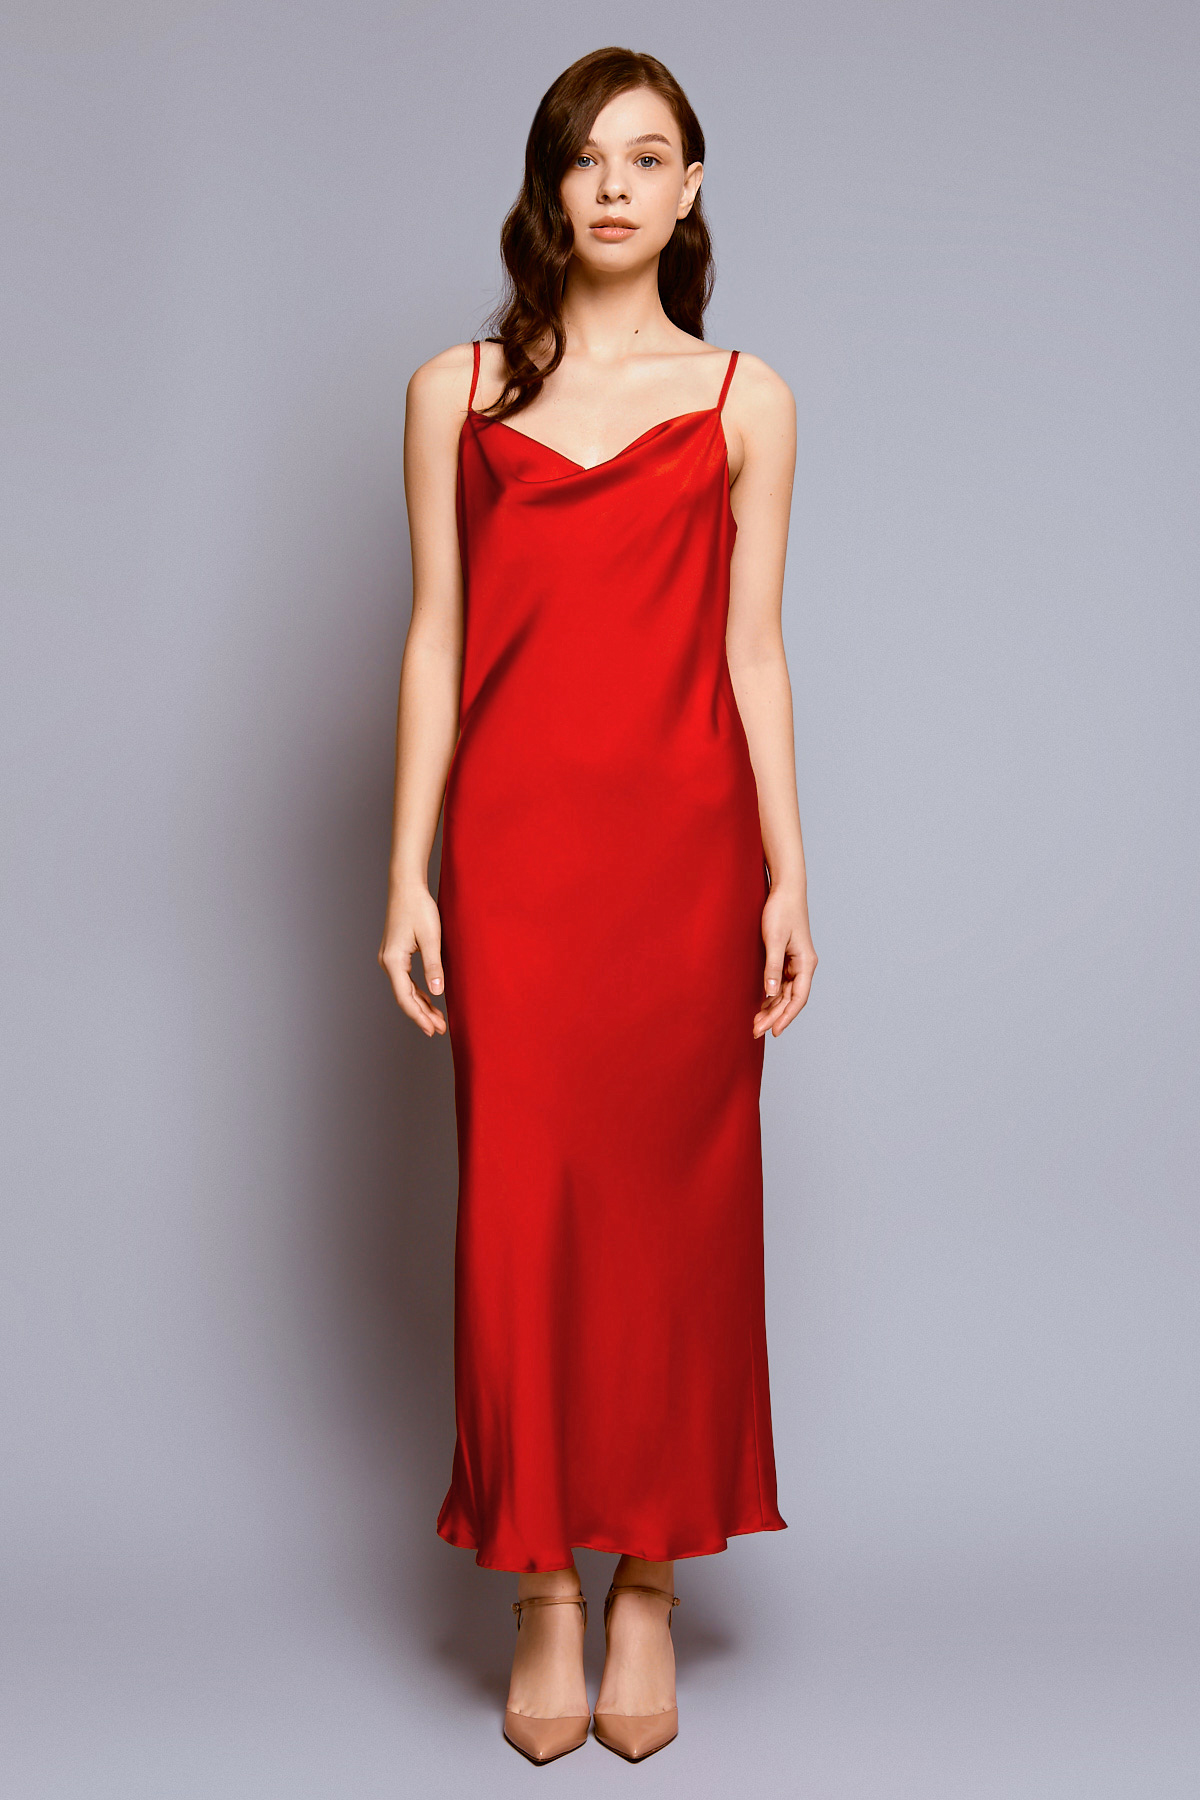 Red slip dress with draped neckline, photo 2